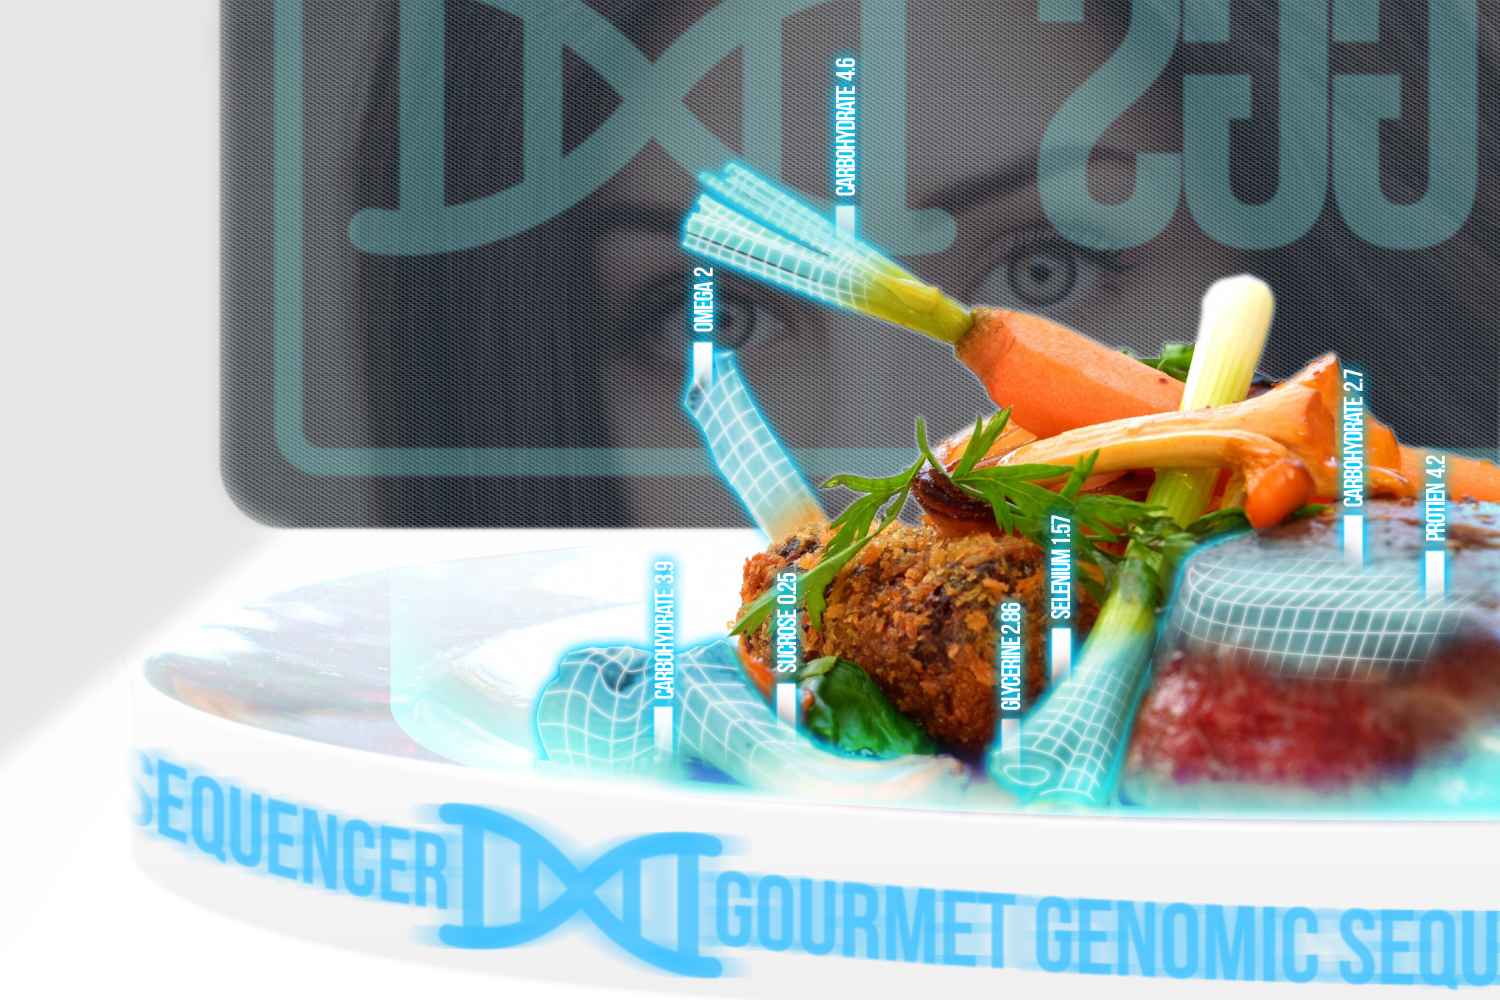 Genomic food